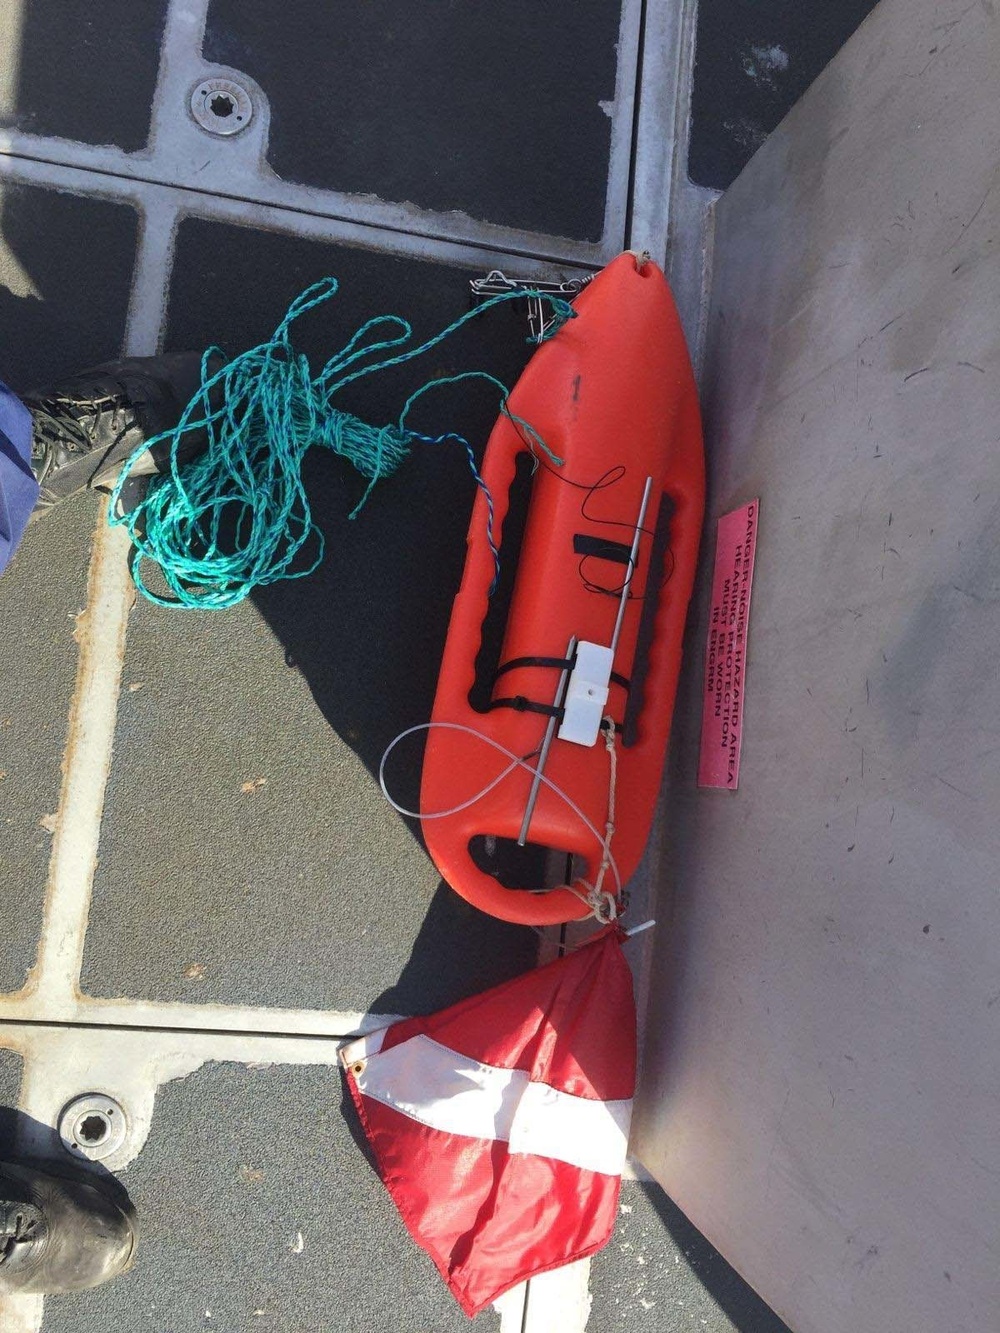 Coast Guard seeks public's help identifying owner of found dive float near La Perouse Bay, Maui